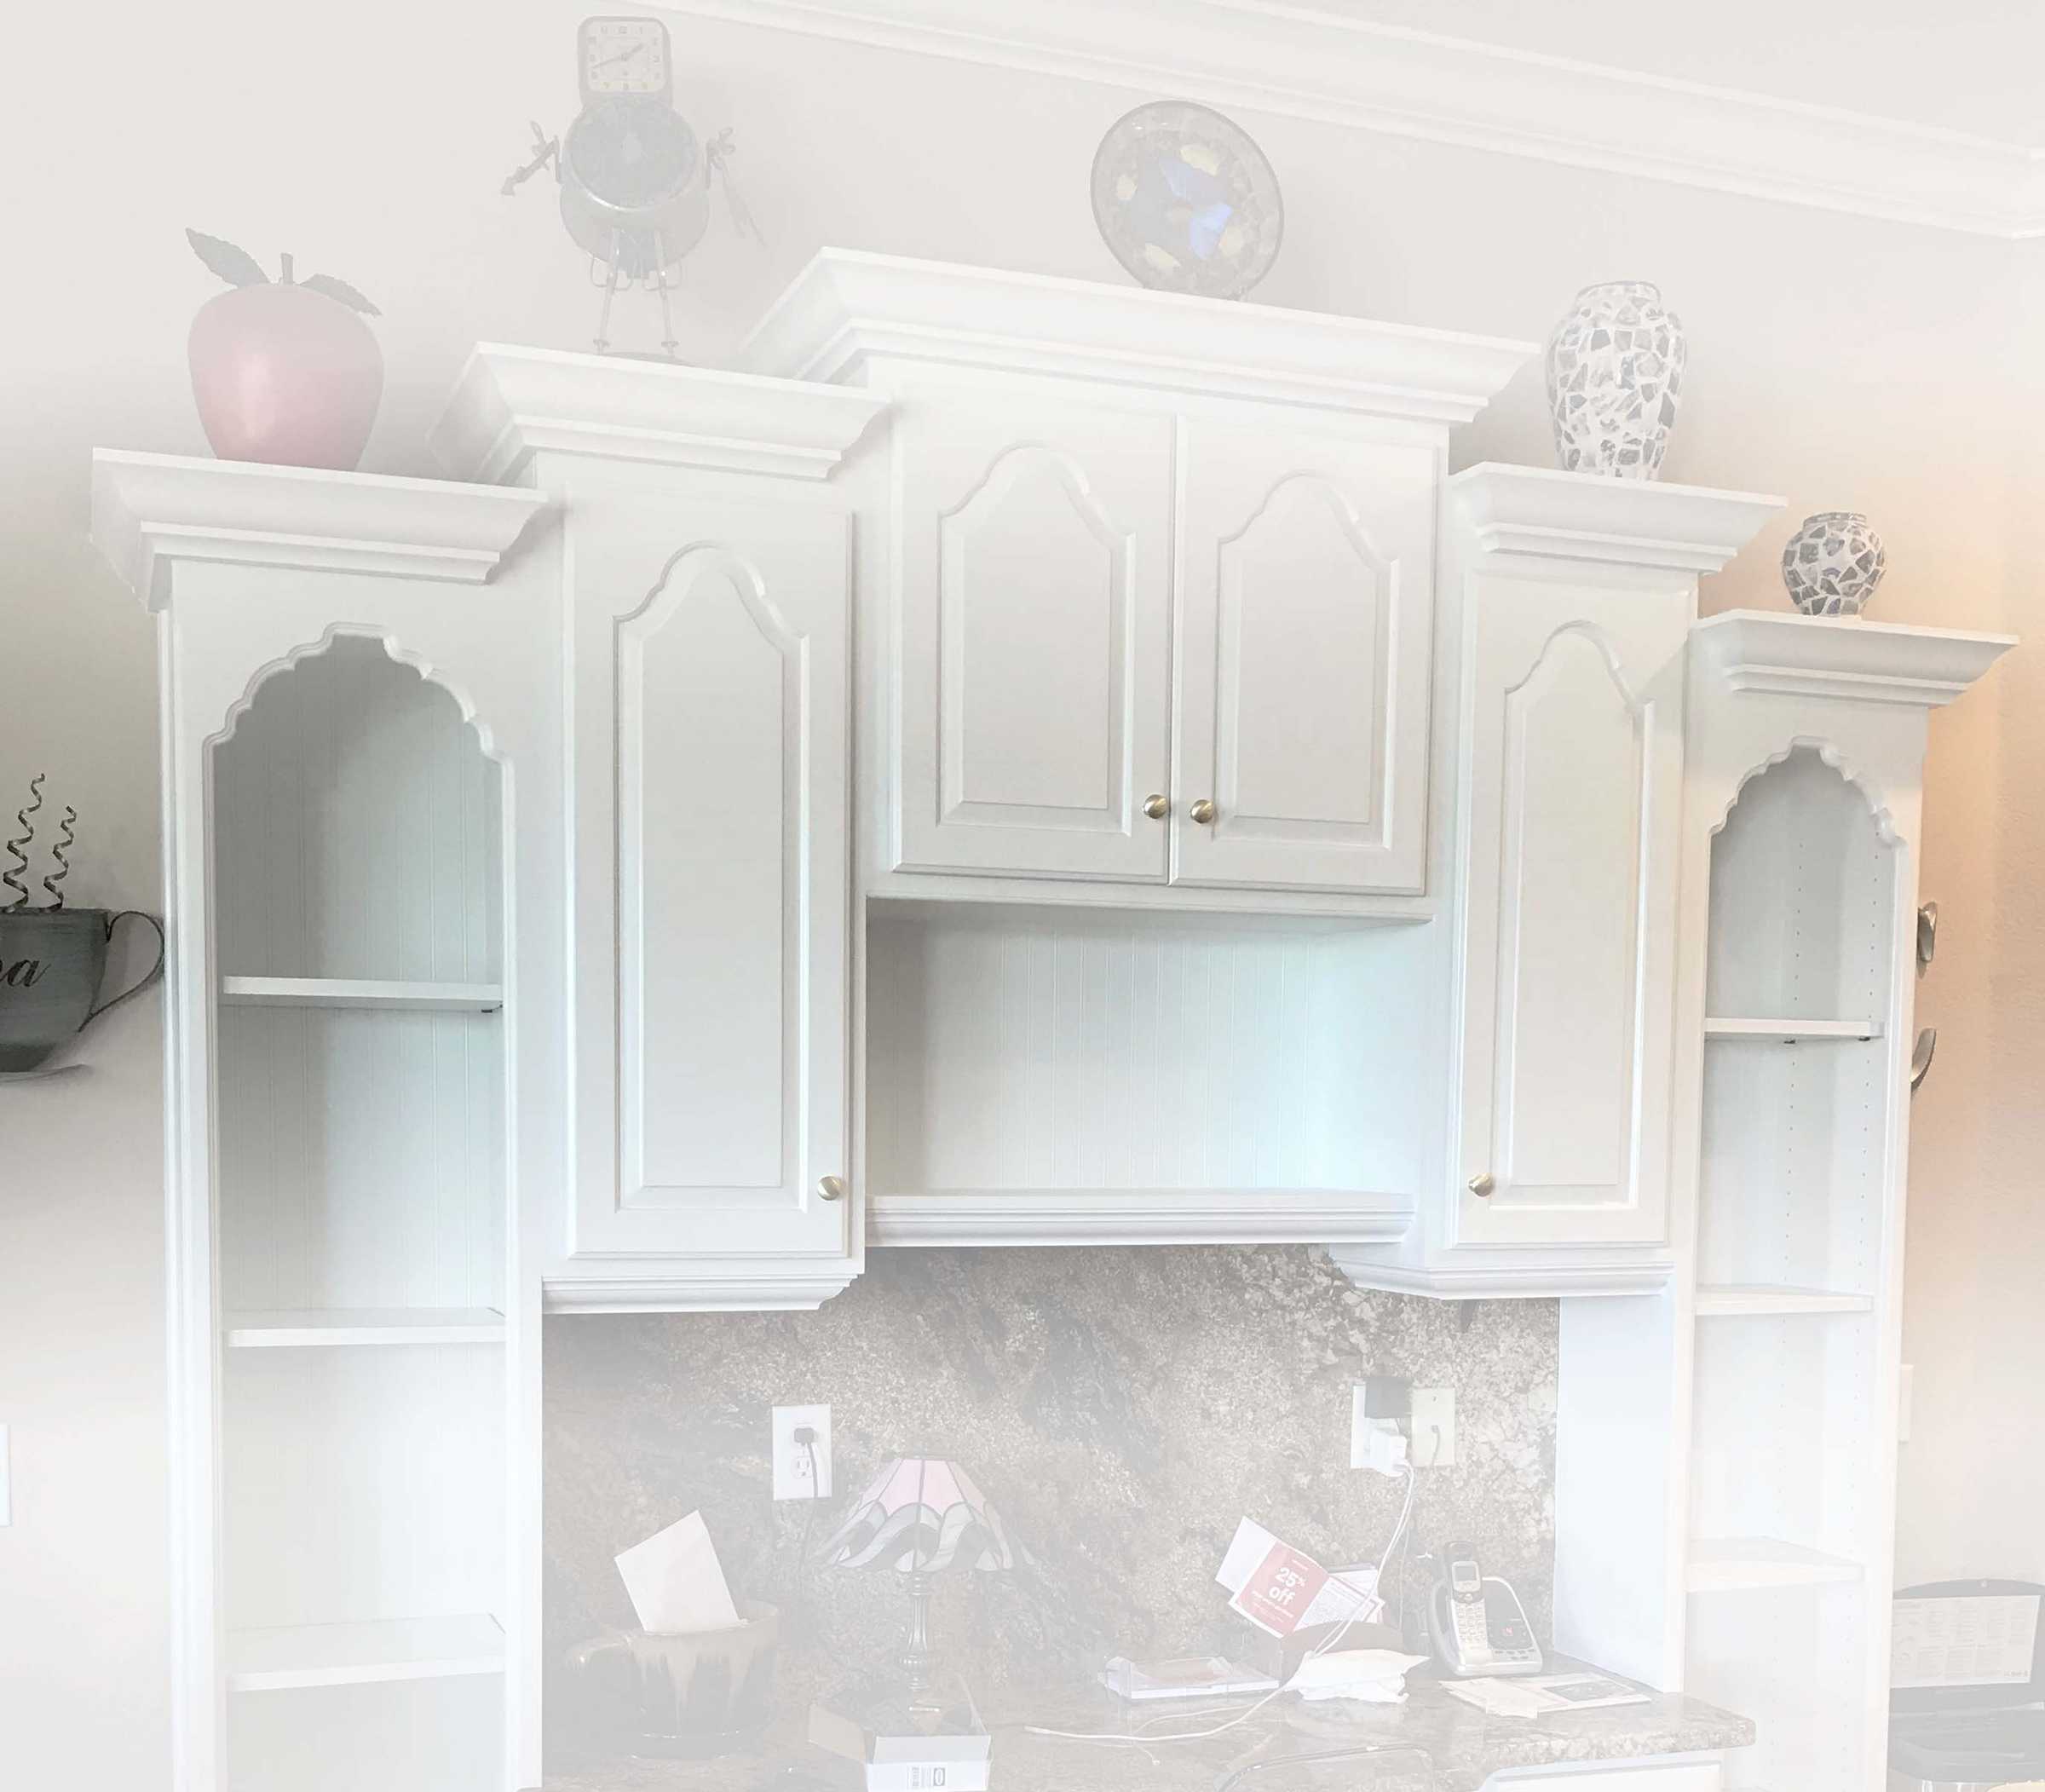 BBS Hero image of beautiful refurnished white kitchen cabinet